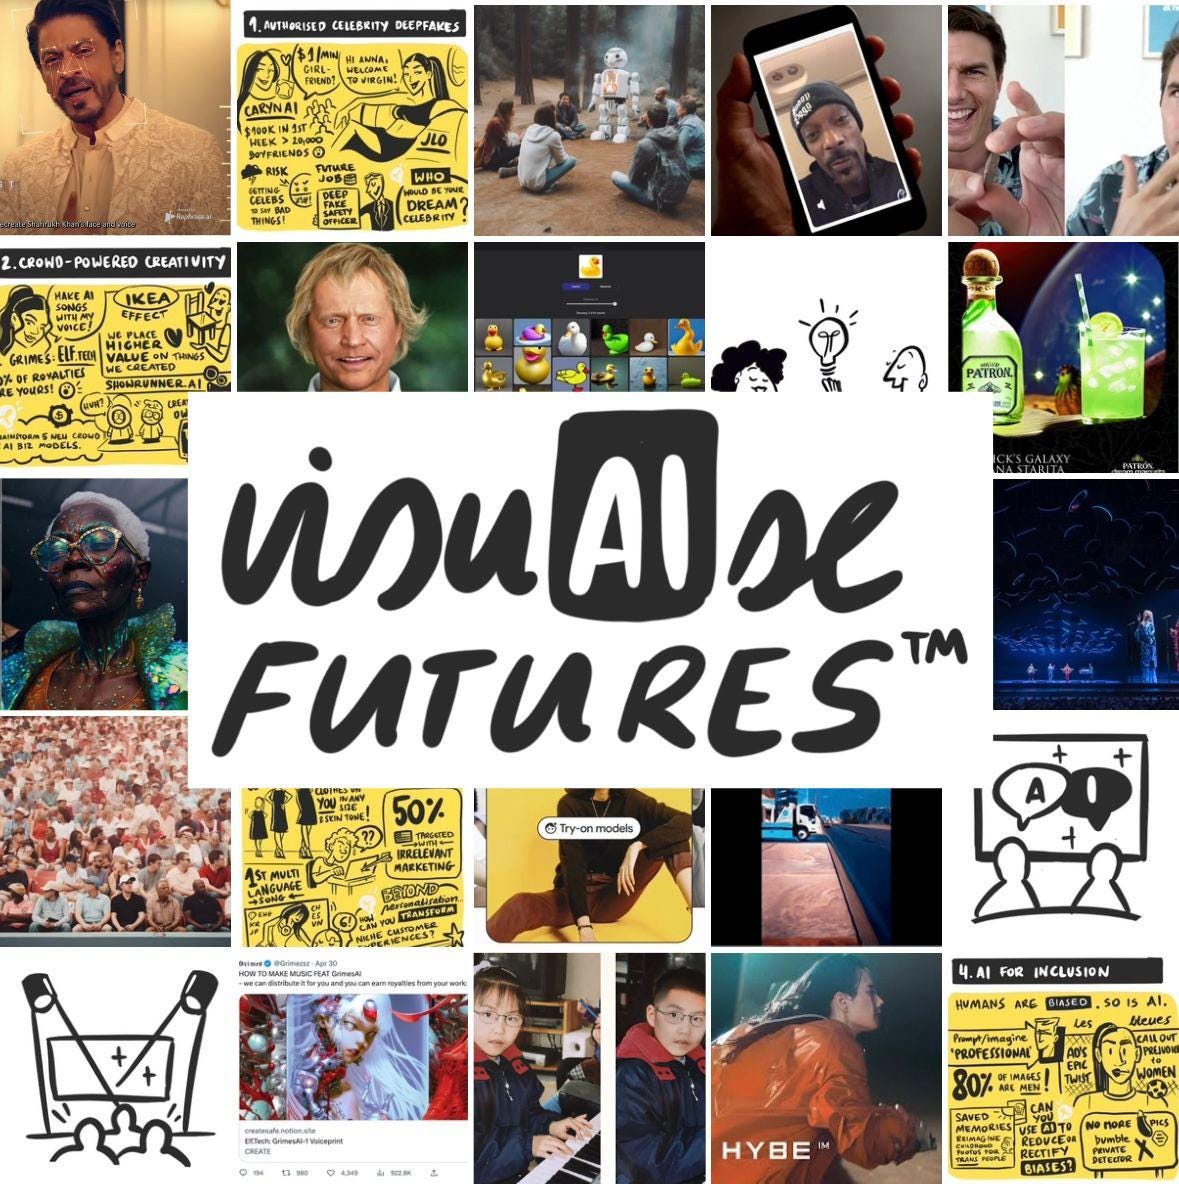 Cover of VisuAIse Futures